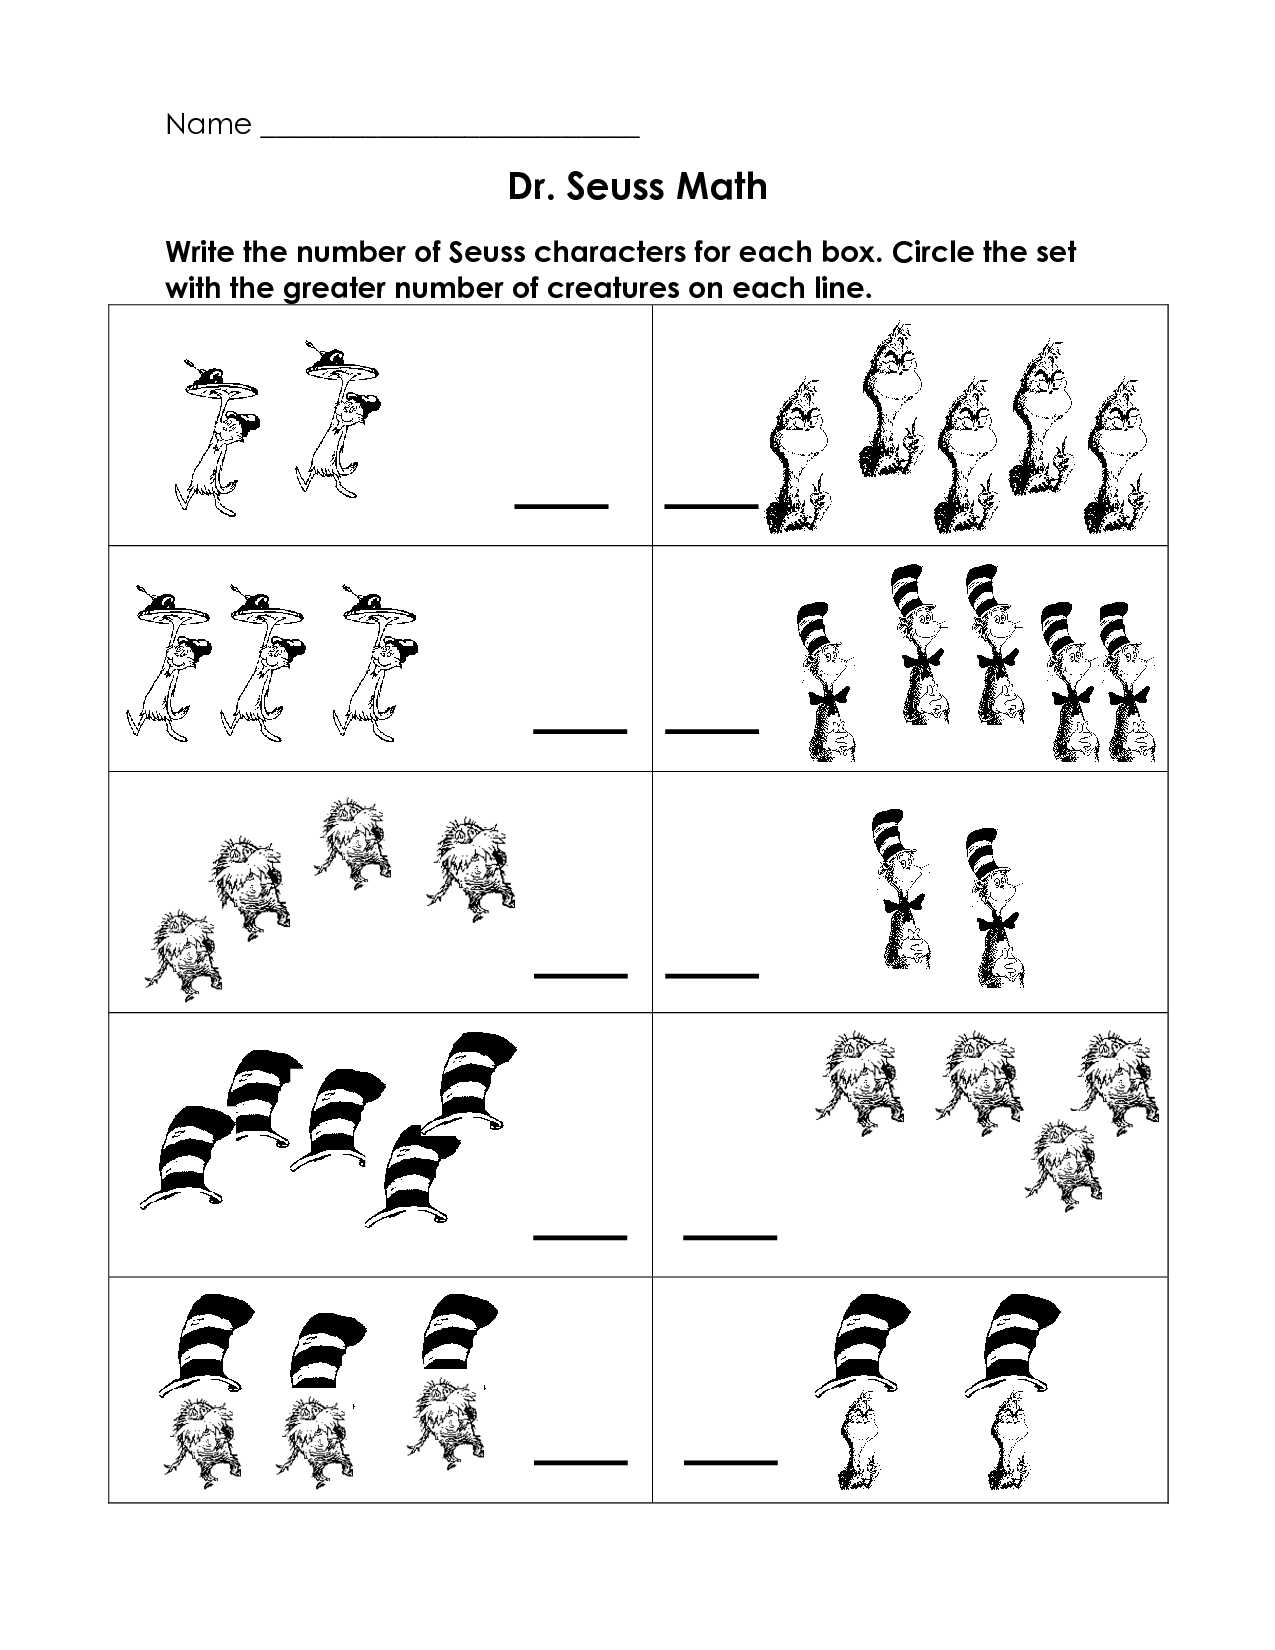 Free Printable 7th Grade Math Worksheets or Free Dr Seuss Printables for Kindergarten Kidz Activities